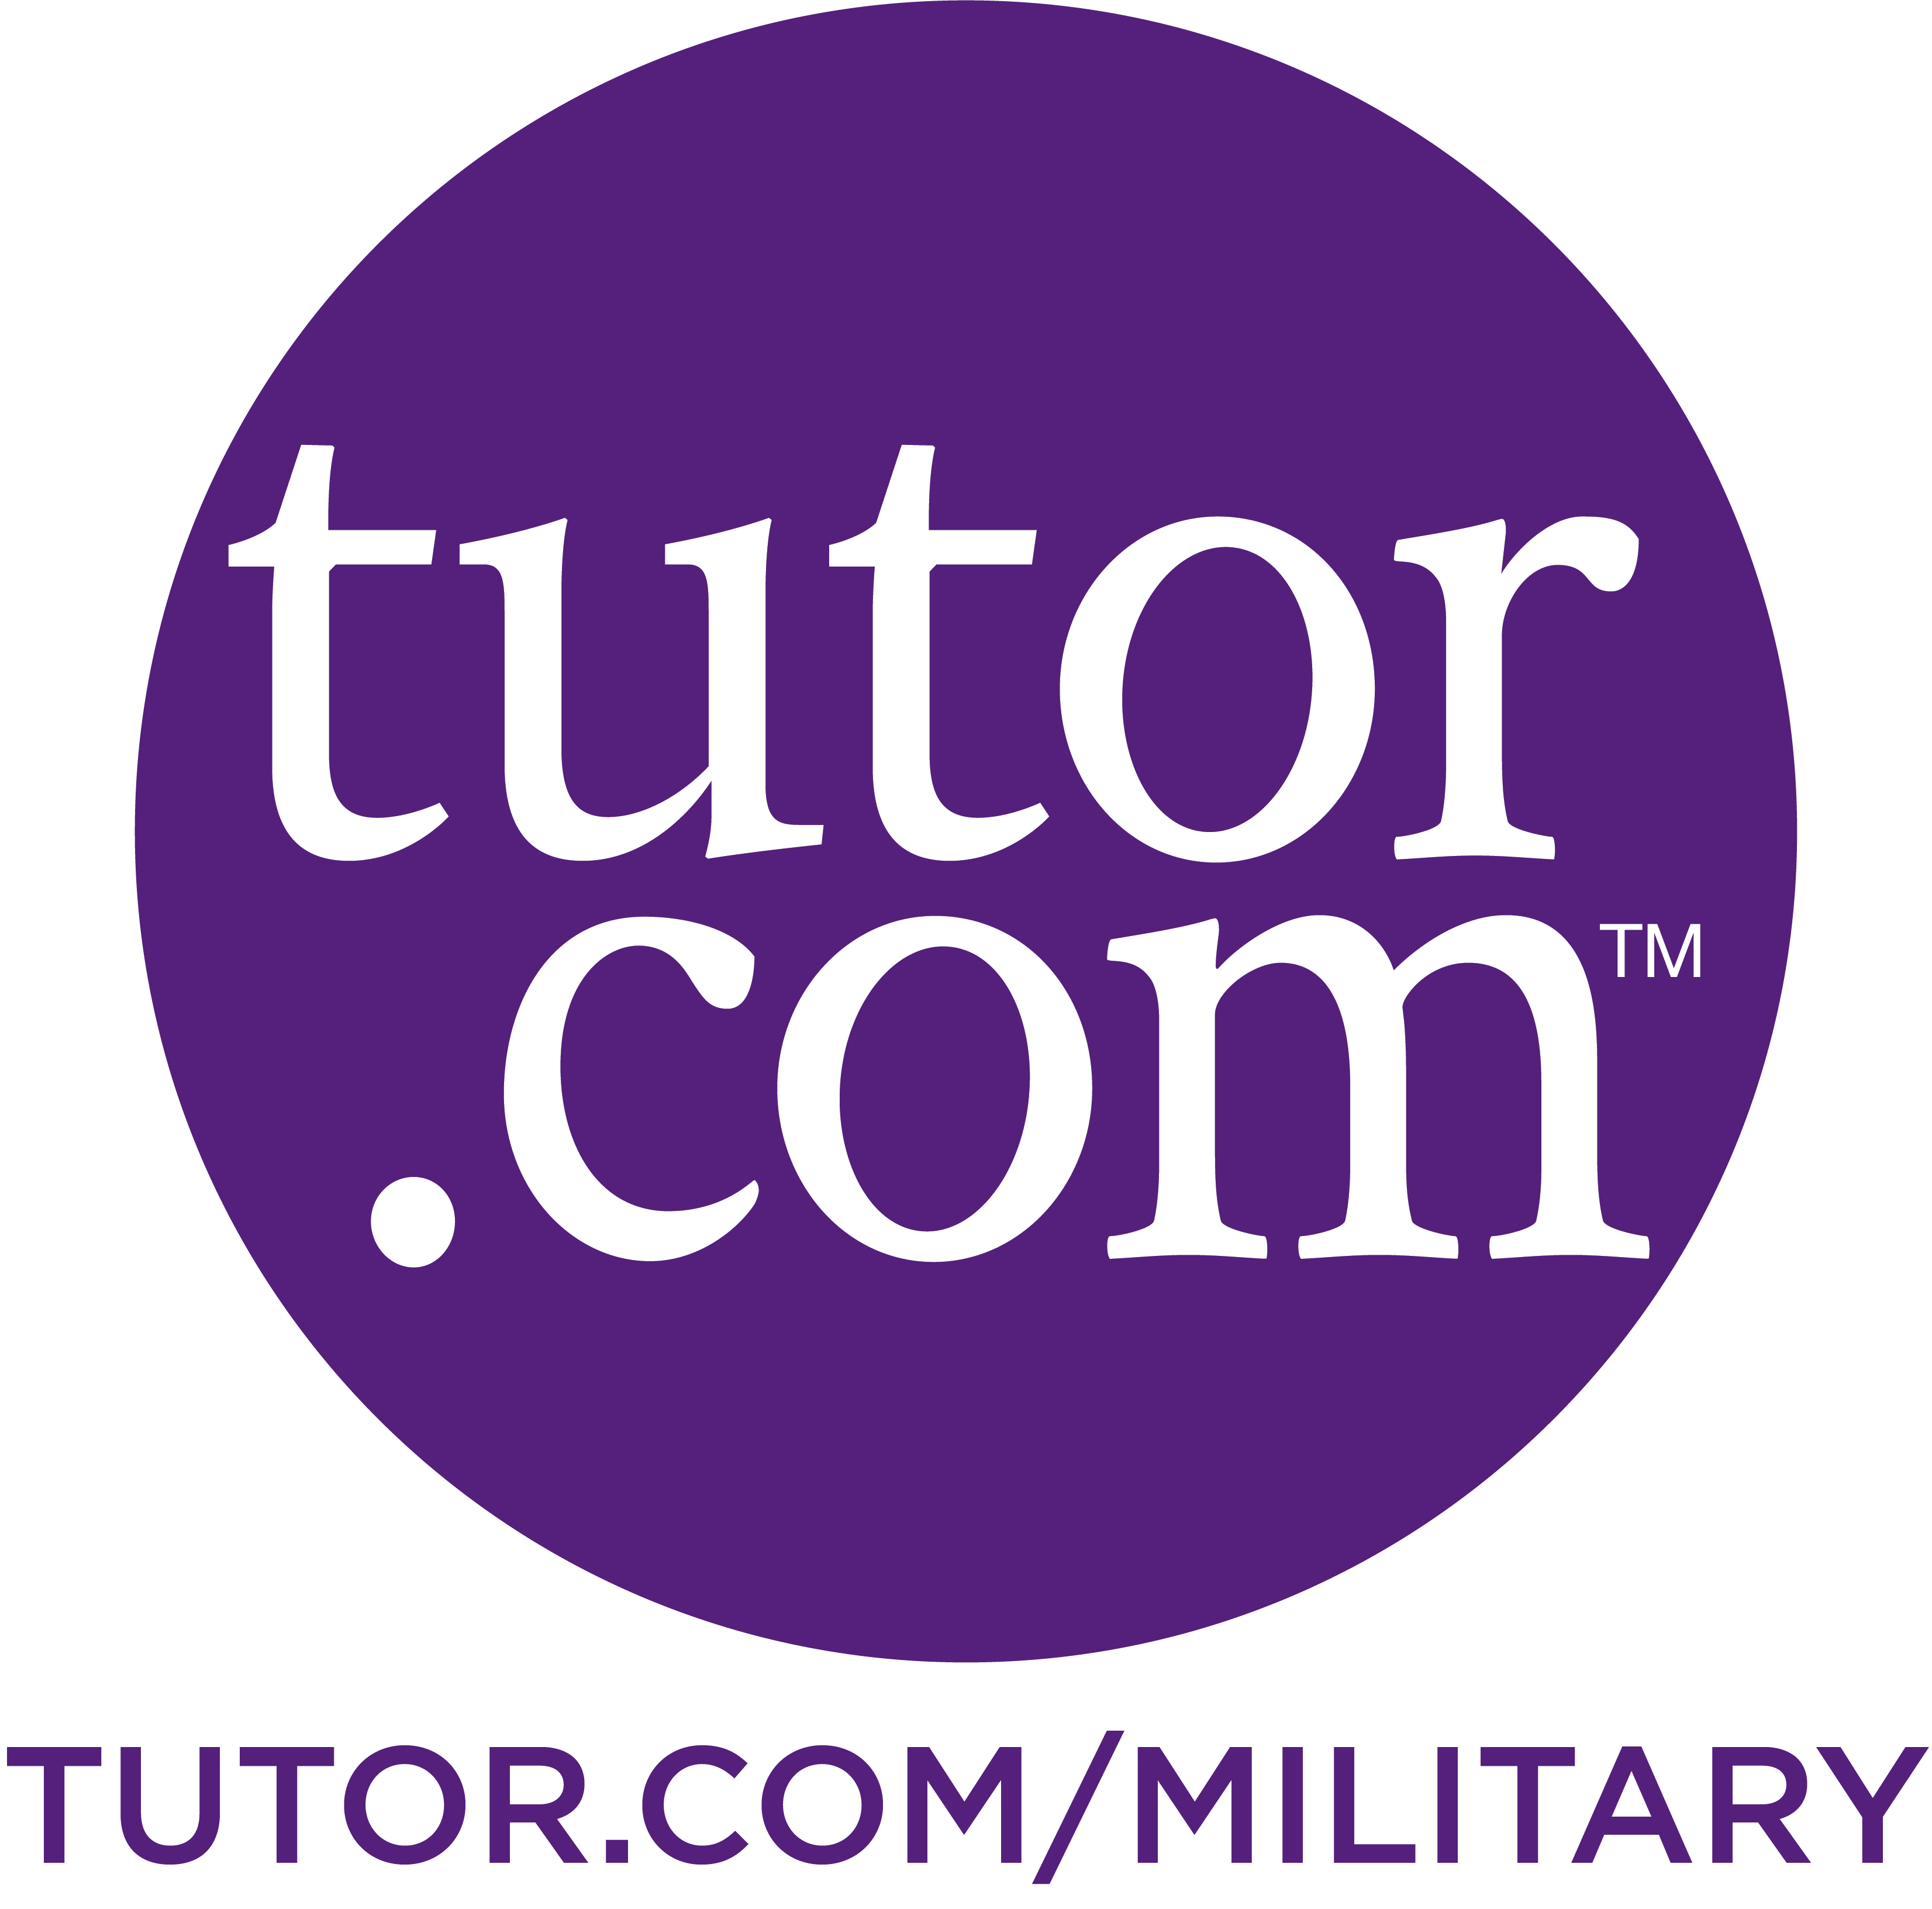 Tutor.com for Military | Digital/Social Media